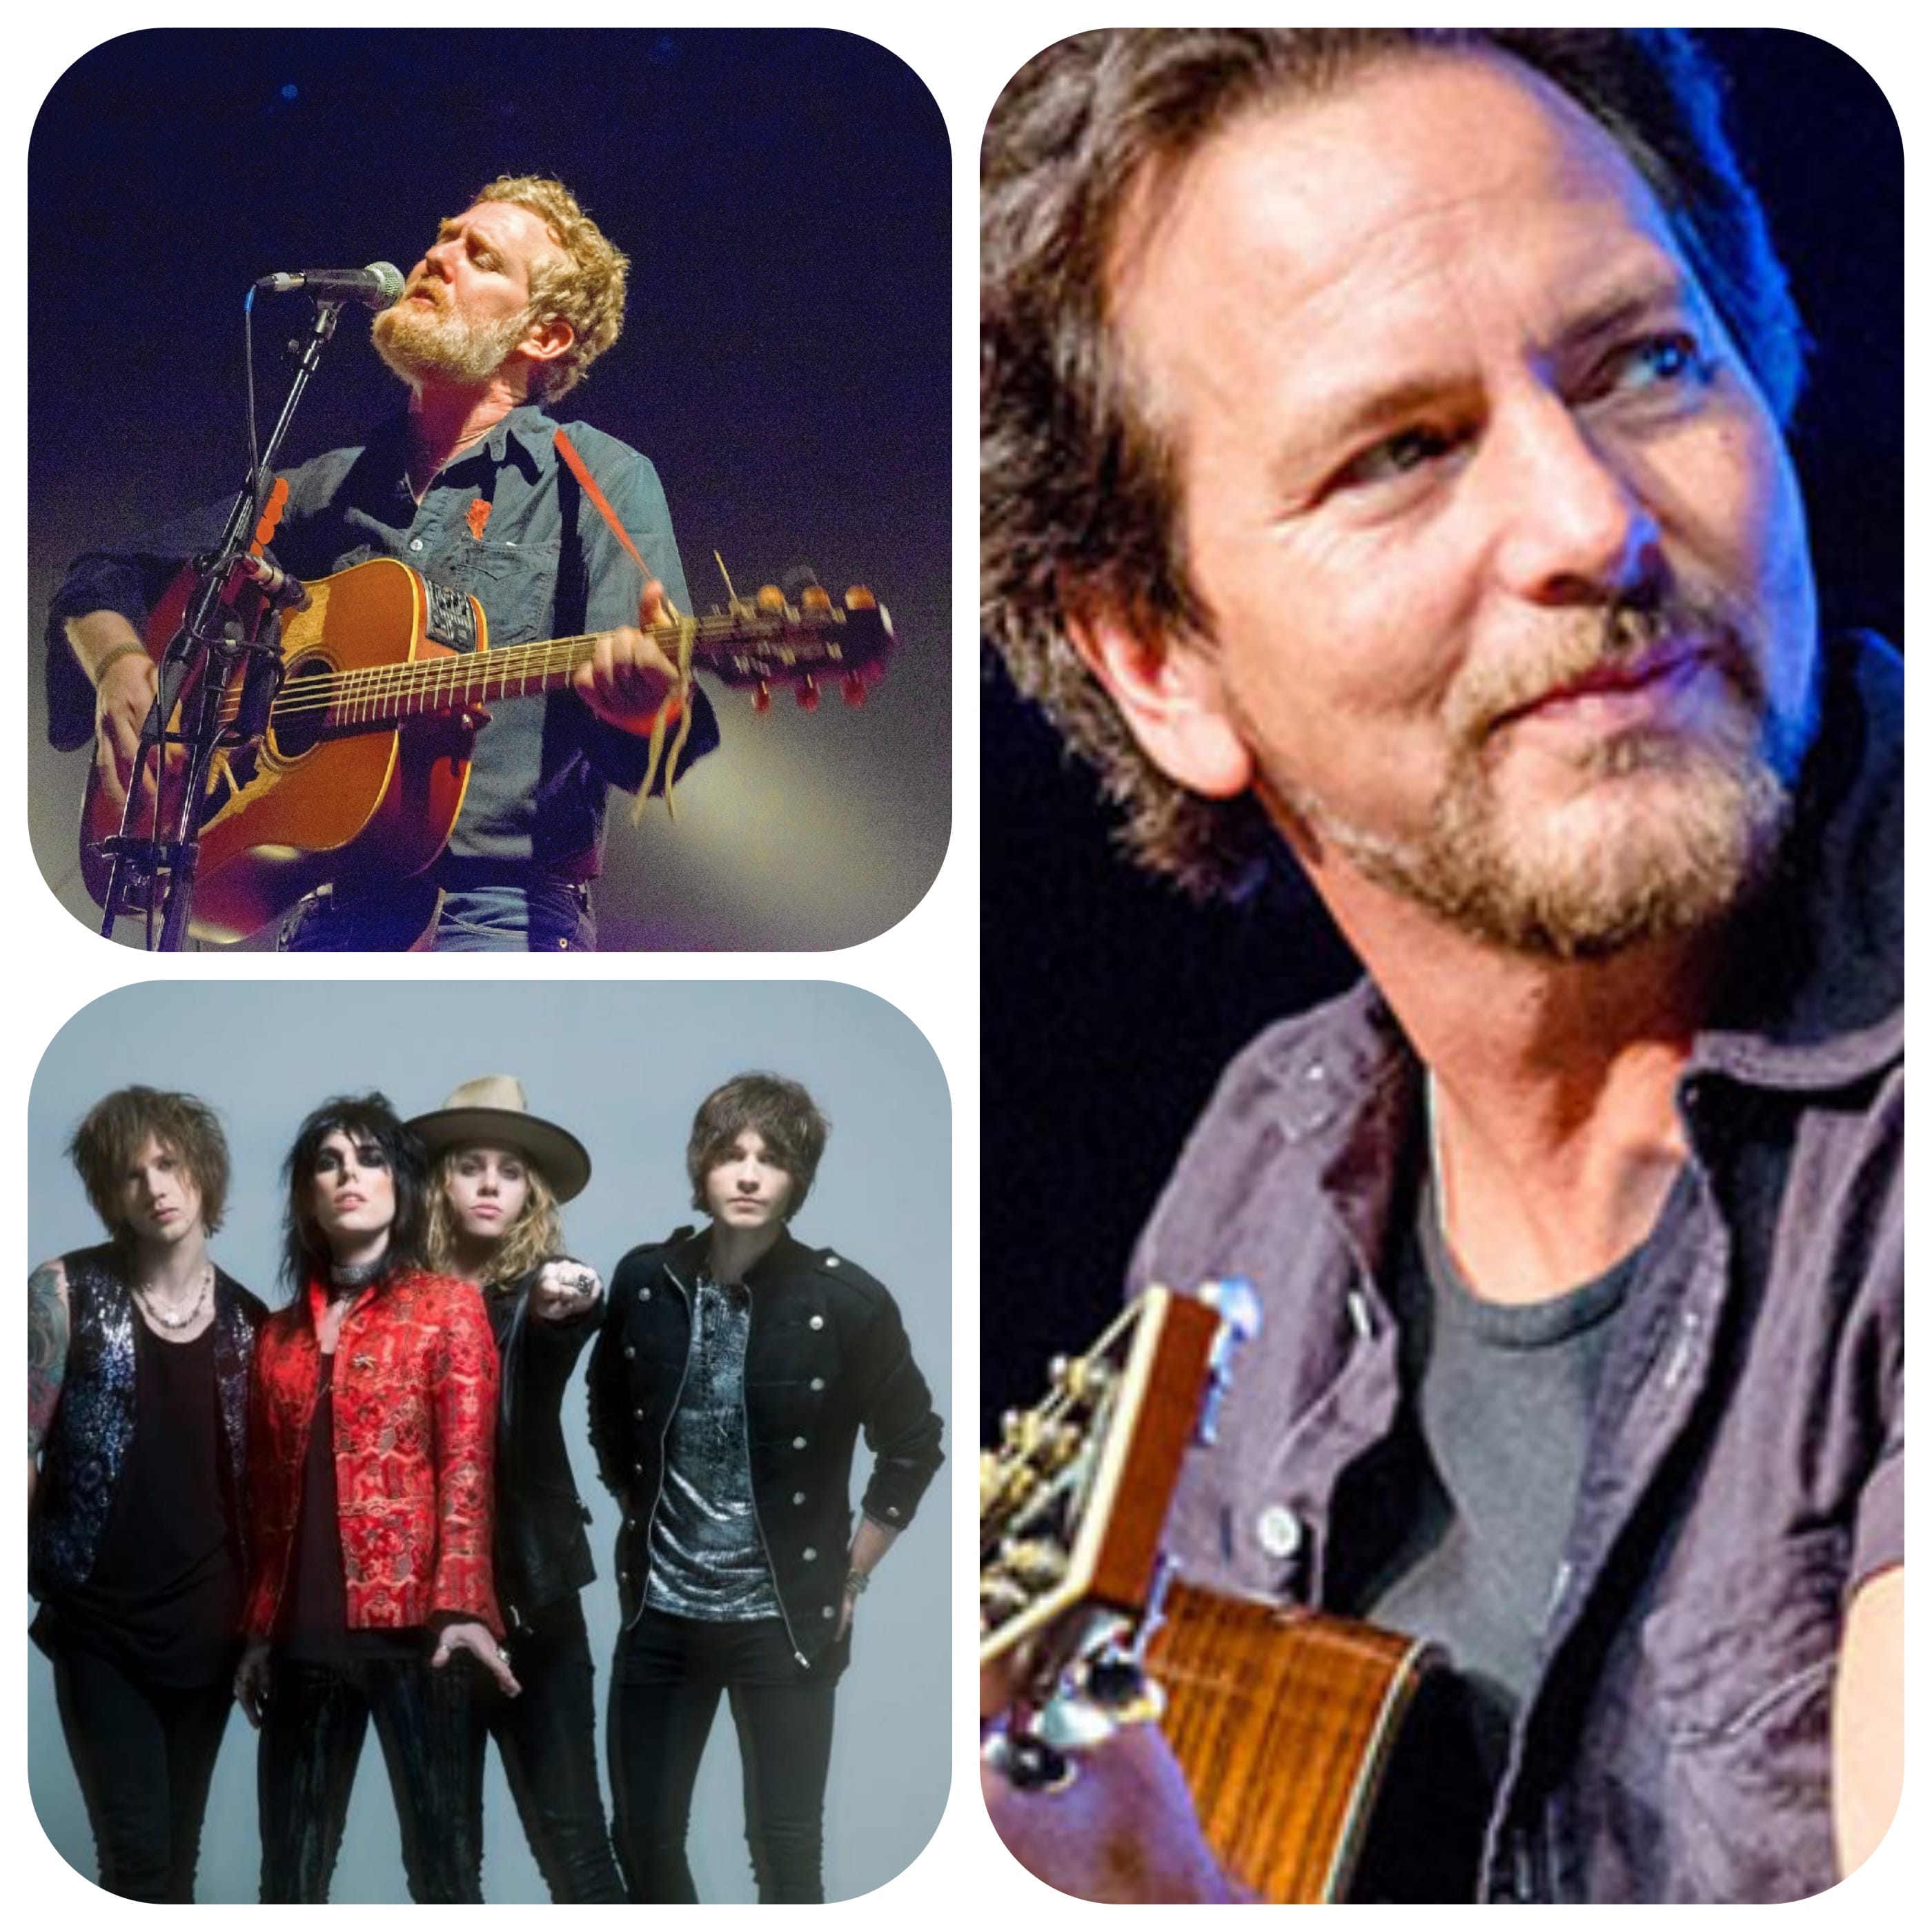 Eddie Vedder e Glen Hansard i nomi di punta per la terza giornata di Firenze Rocks 2019